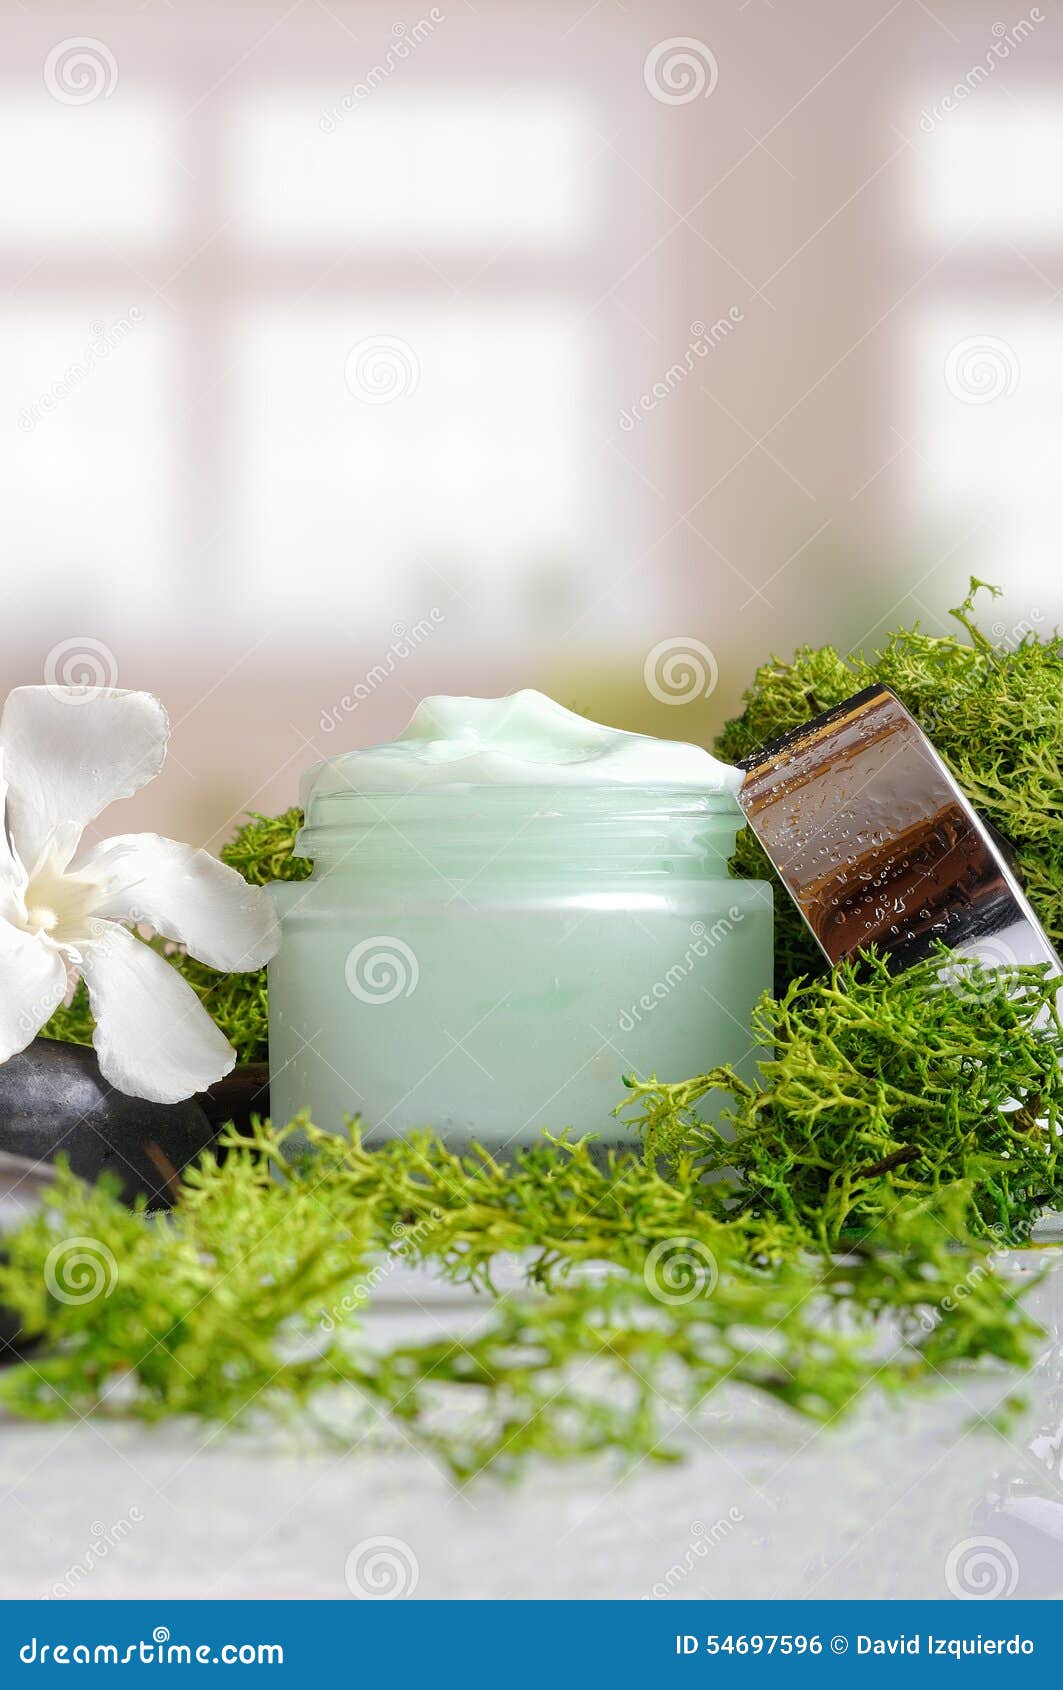 Cream Jar Algae Vertical View Stock Photo - Image of body, cool: 54697596